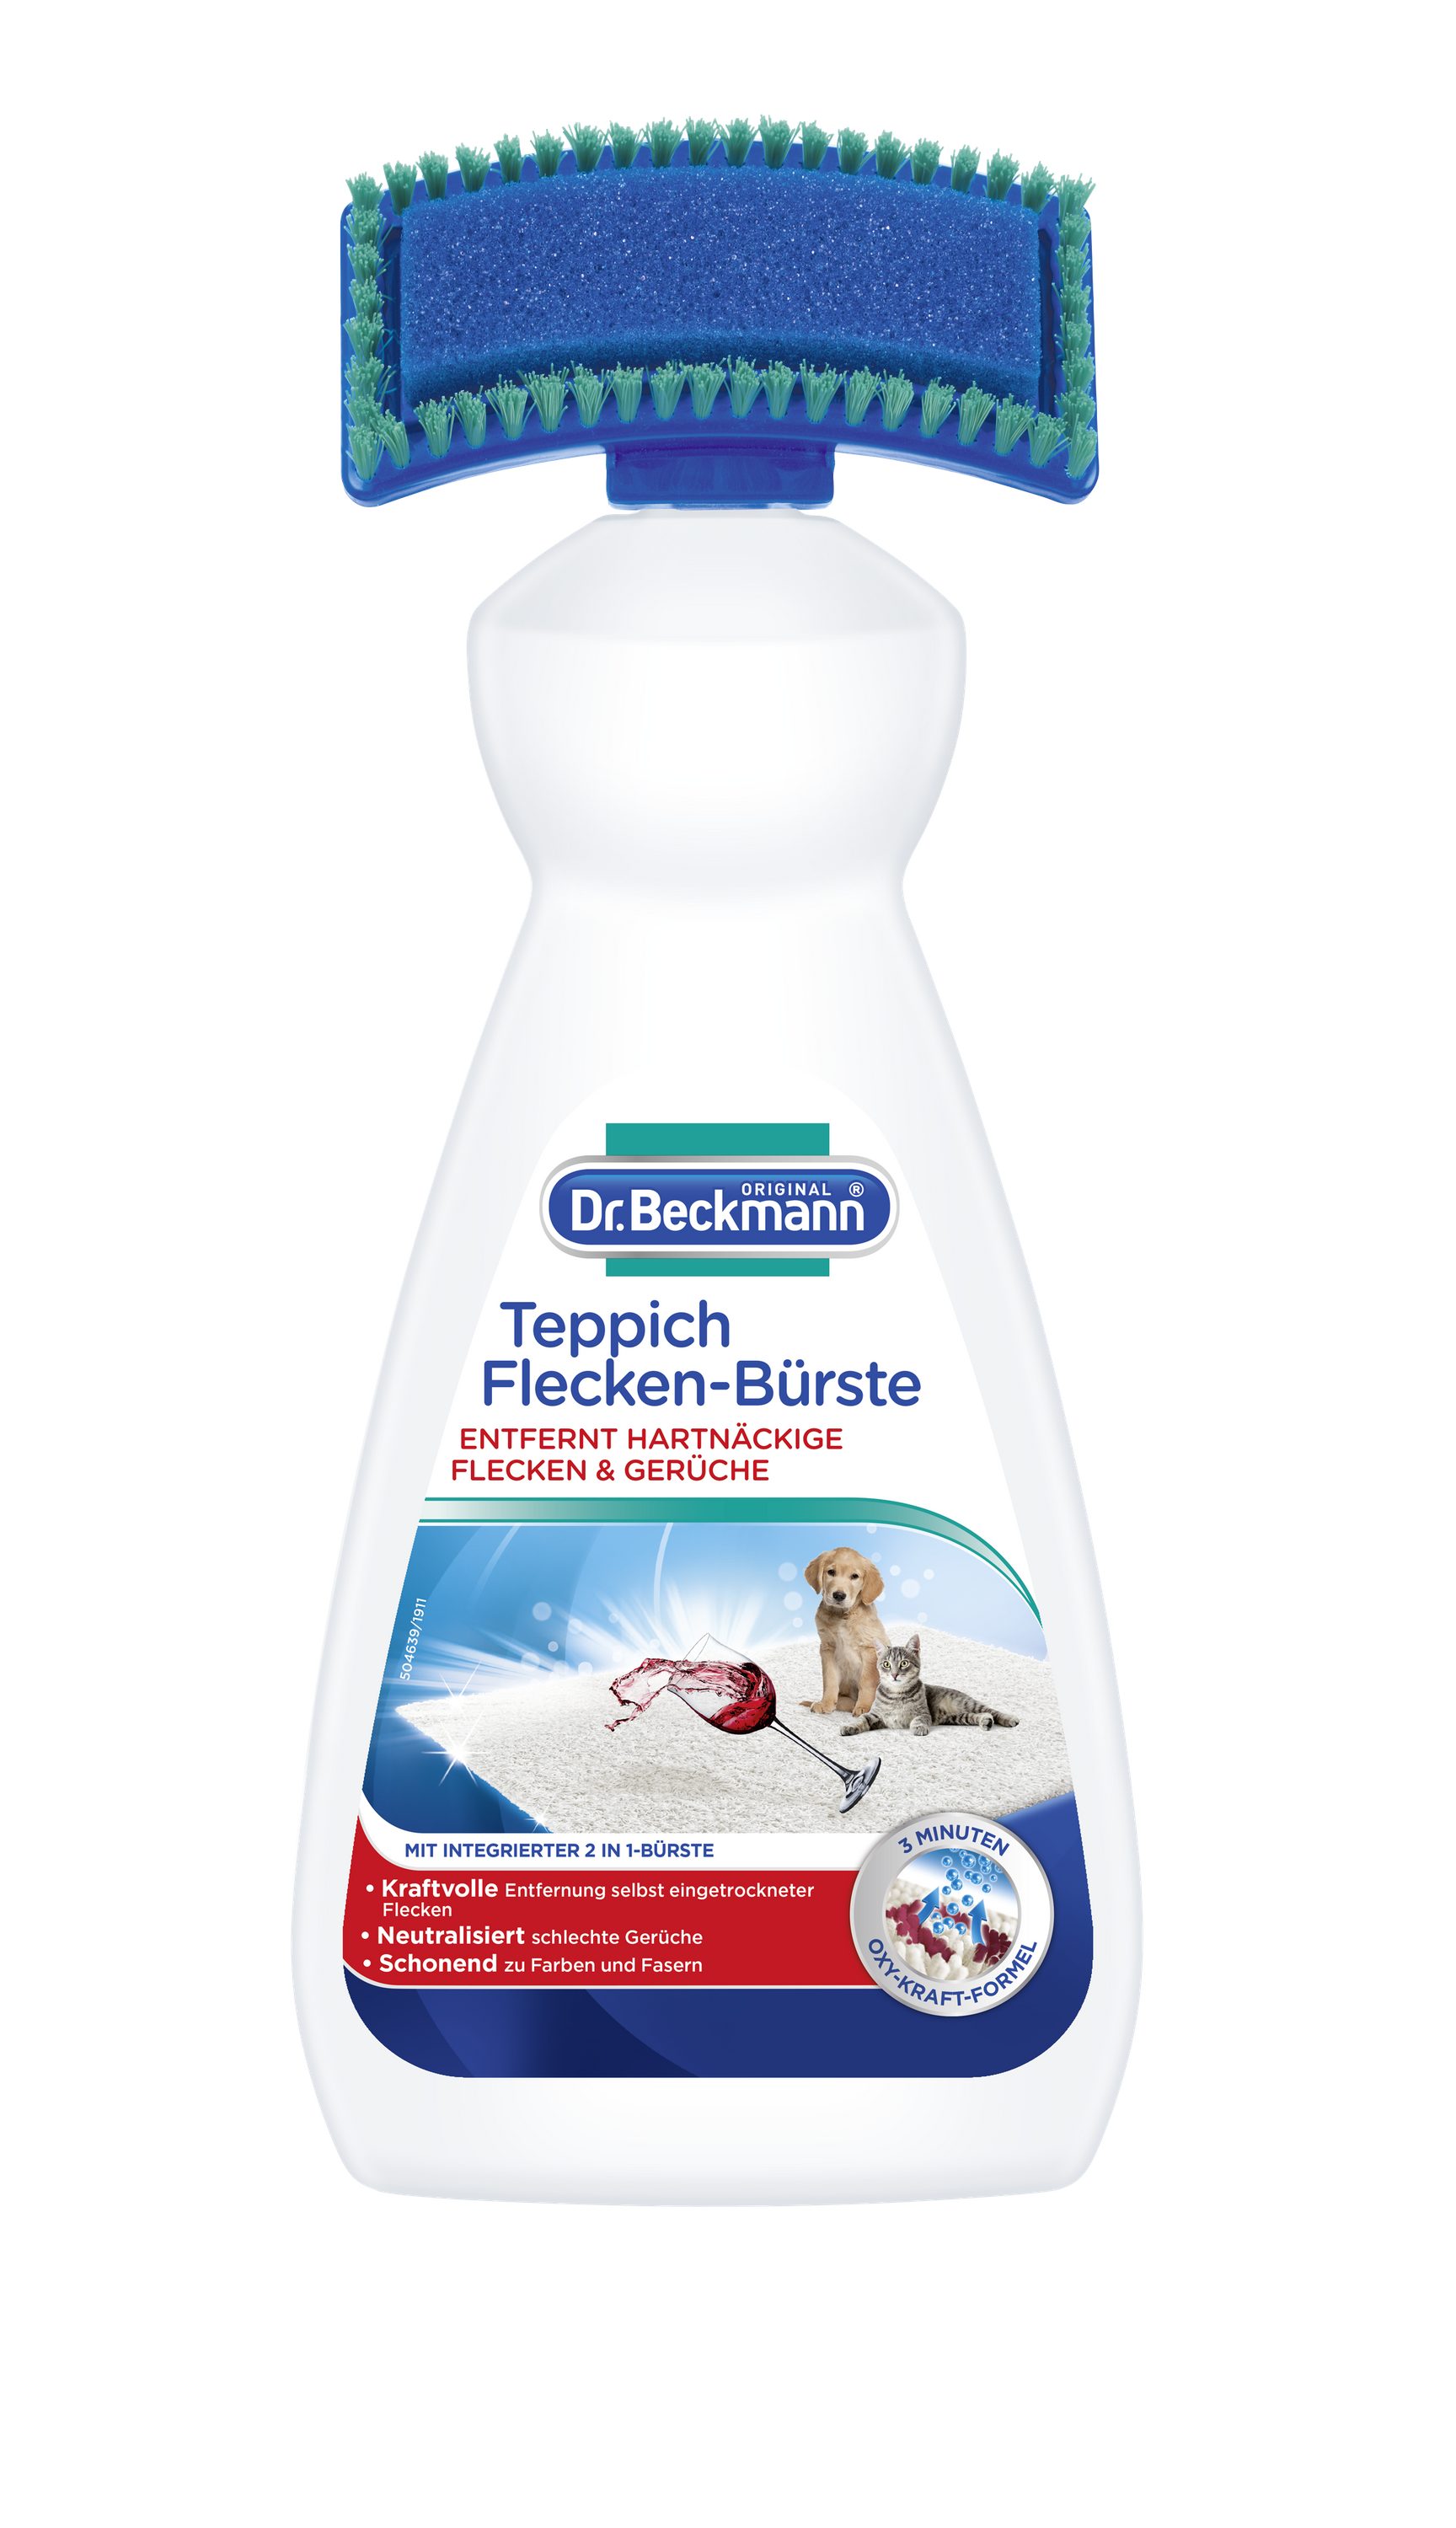 Dr. Beckmann Teppich Flecken-Bürste, hartnäckiger Flecken & Gerüche, 1x 650 ml Polsterreiniger